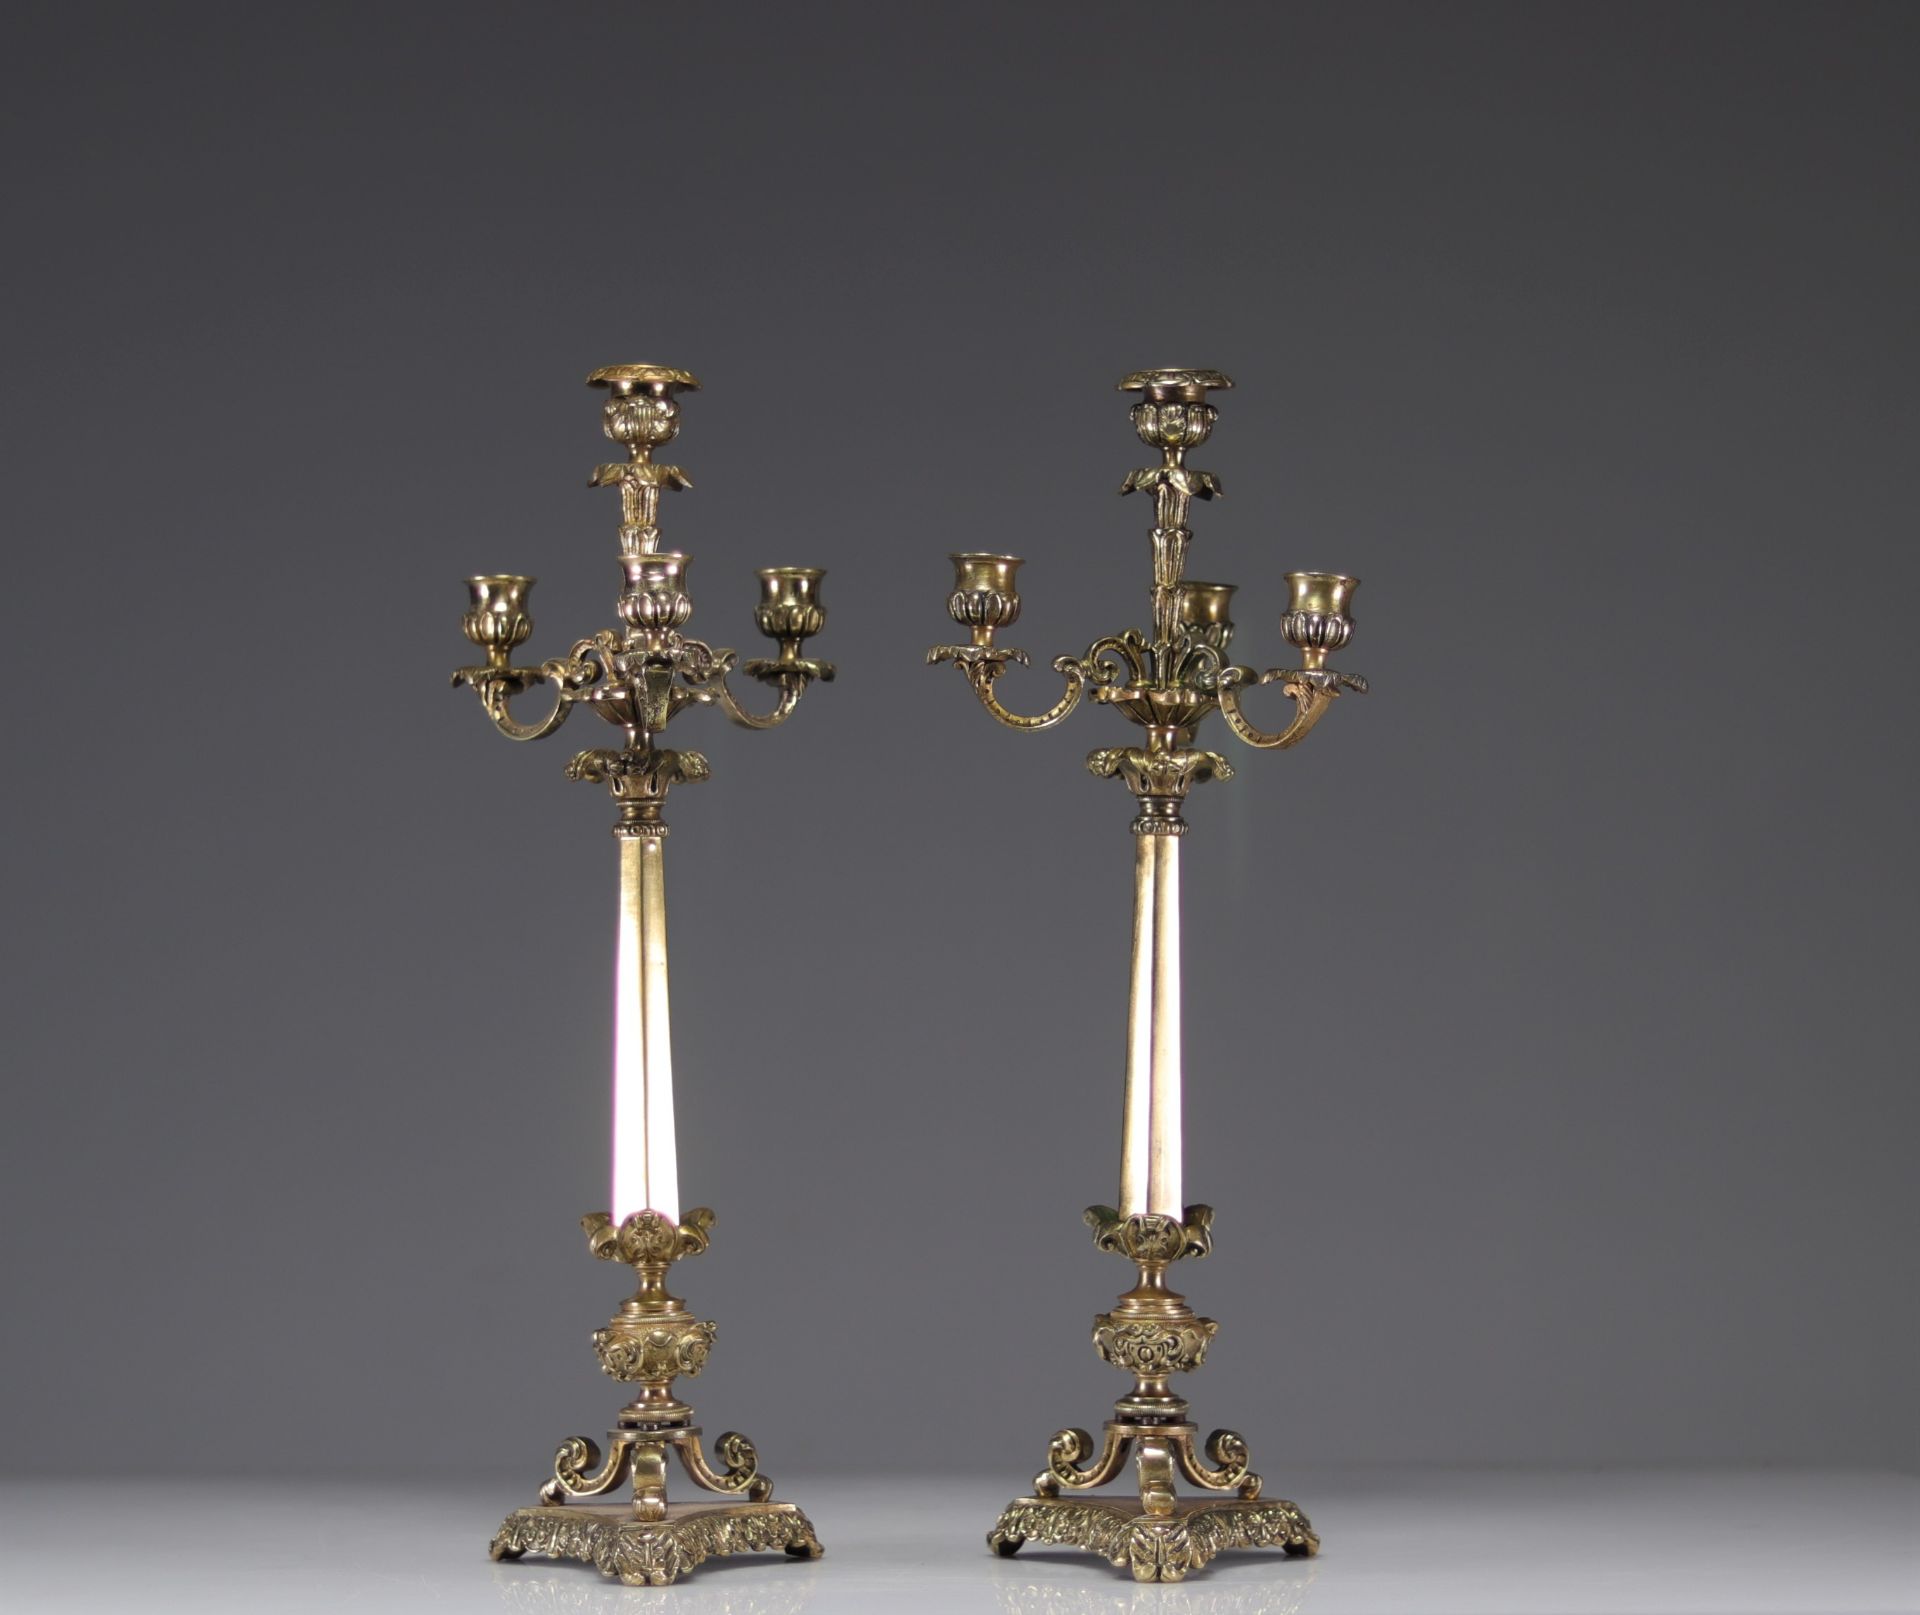 19th century pair of bronze candelabra